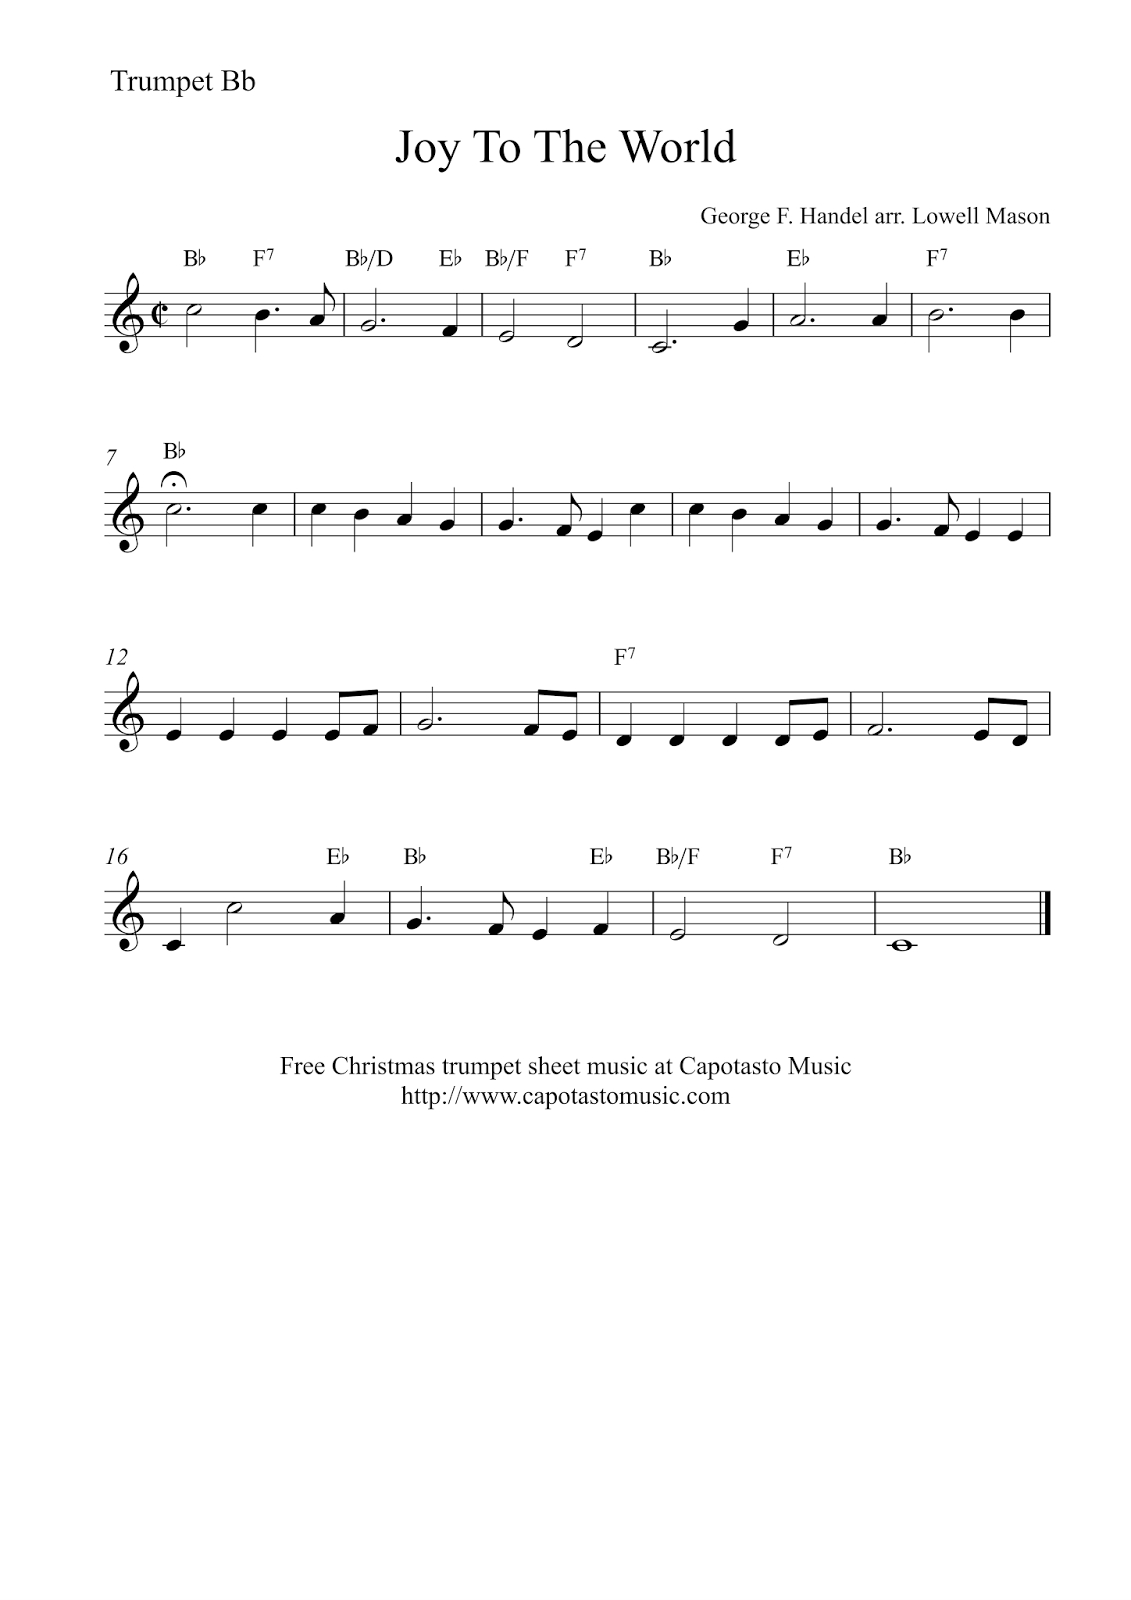 Joy To The World | Free Christmas Trumpet Sheet Music - Free Printable Sheet Music For Trumpet